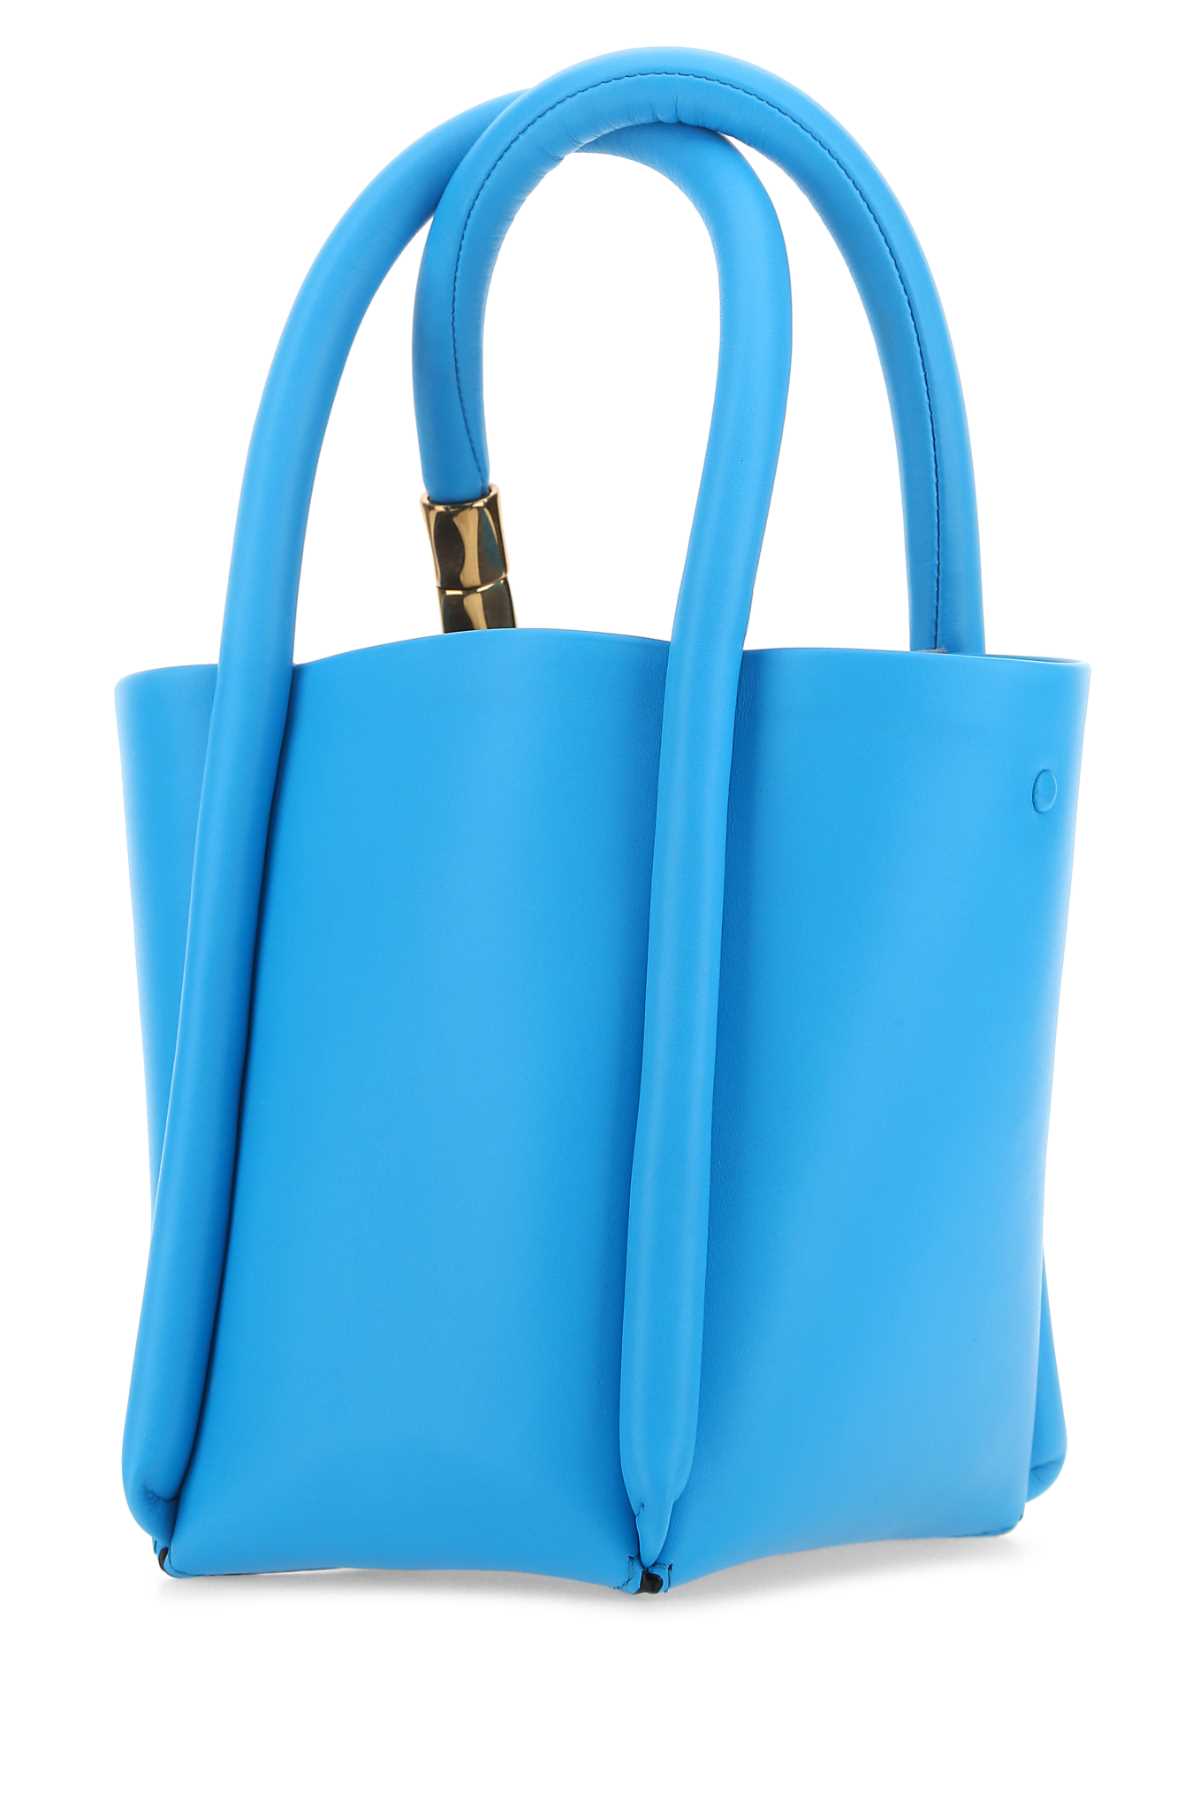 Boyy Light Blue Leather Lotus 12 Handbag In Hawaii